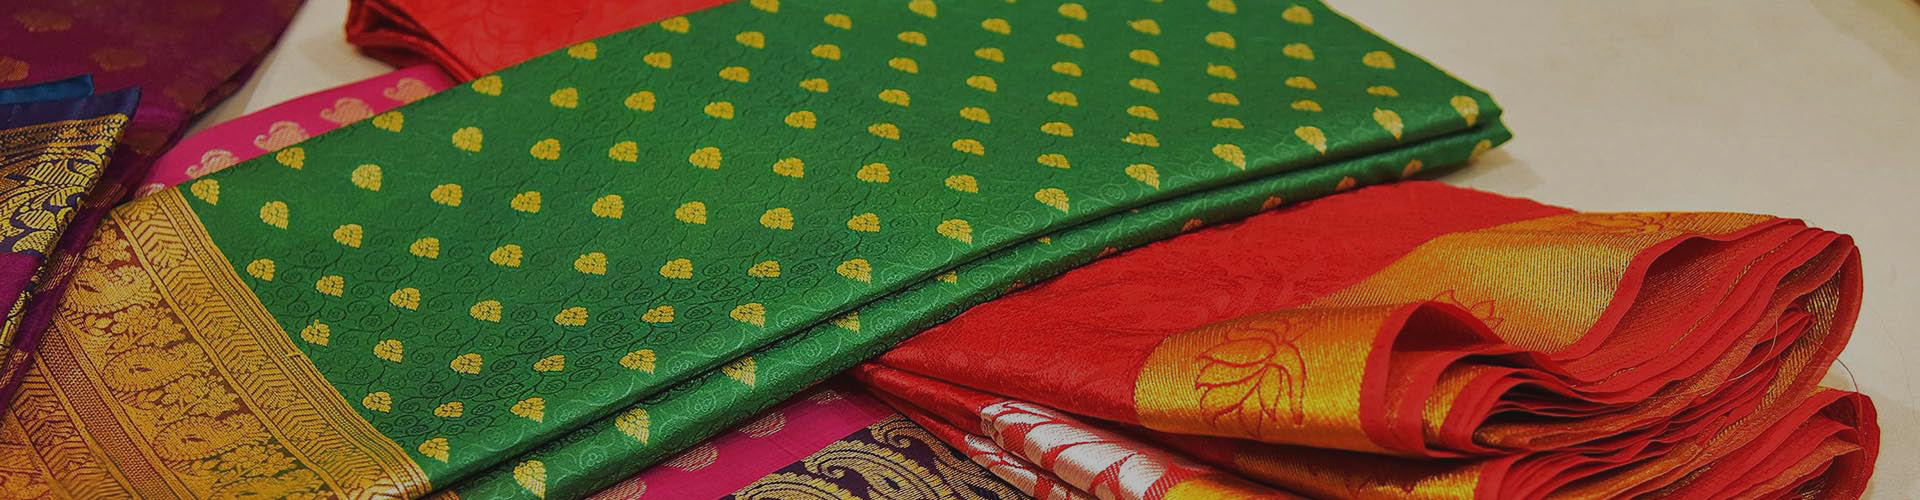 Bhagalpuri sarees, also known as Tussar silk sarees